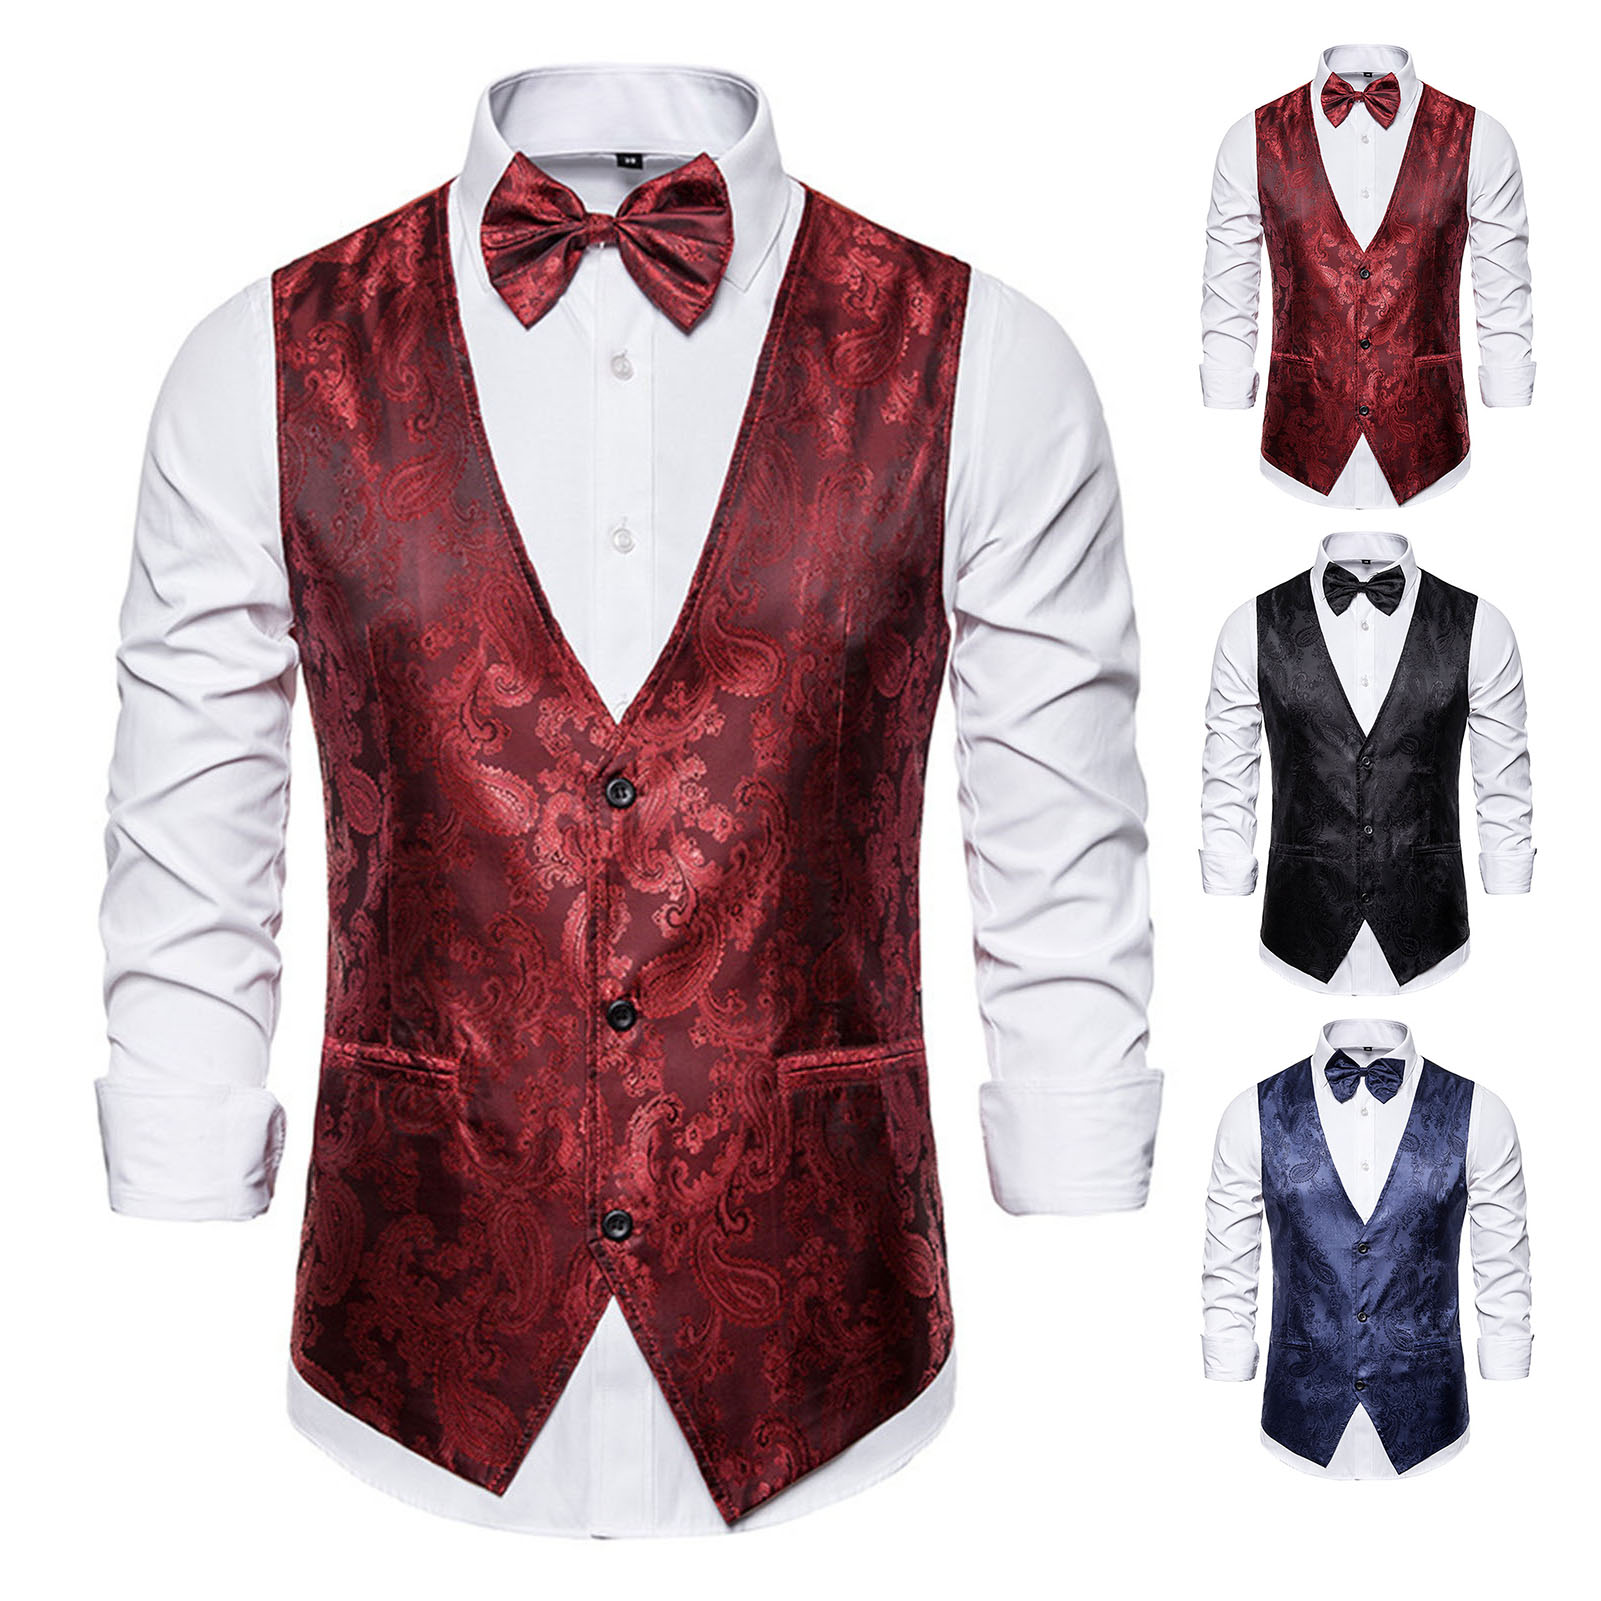 Buy ERZTIAY Men's Vest Formal Dress Business Slim Fit Sleeveless Vest  Waistcoat, Black, Small at Amazon.in